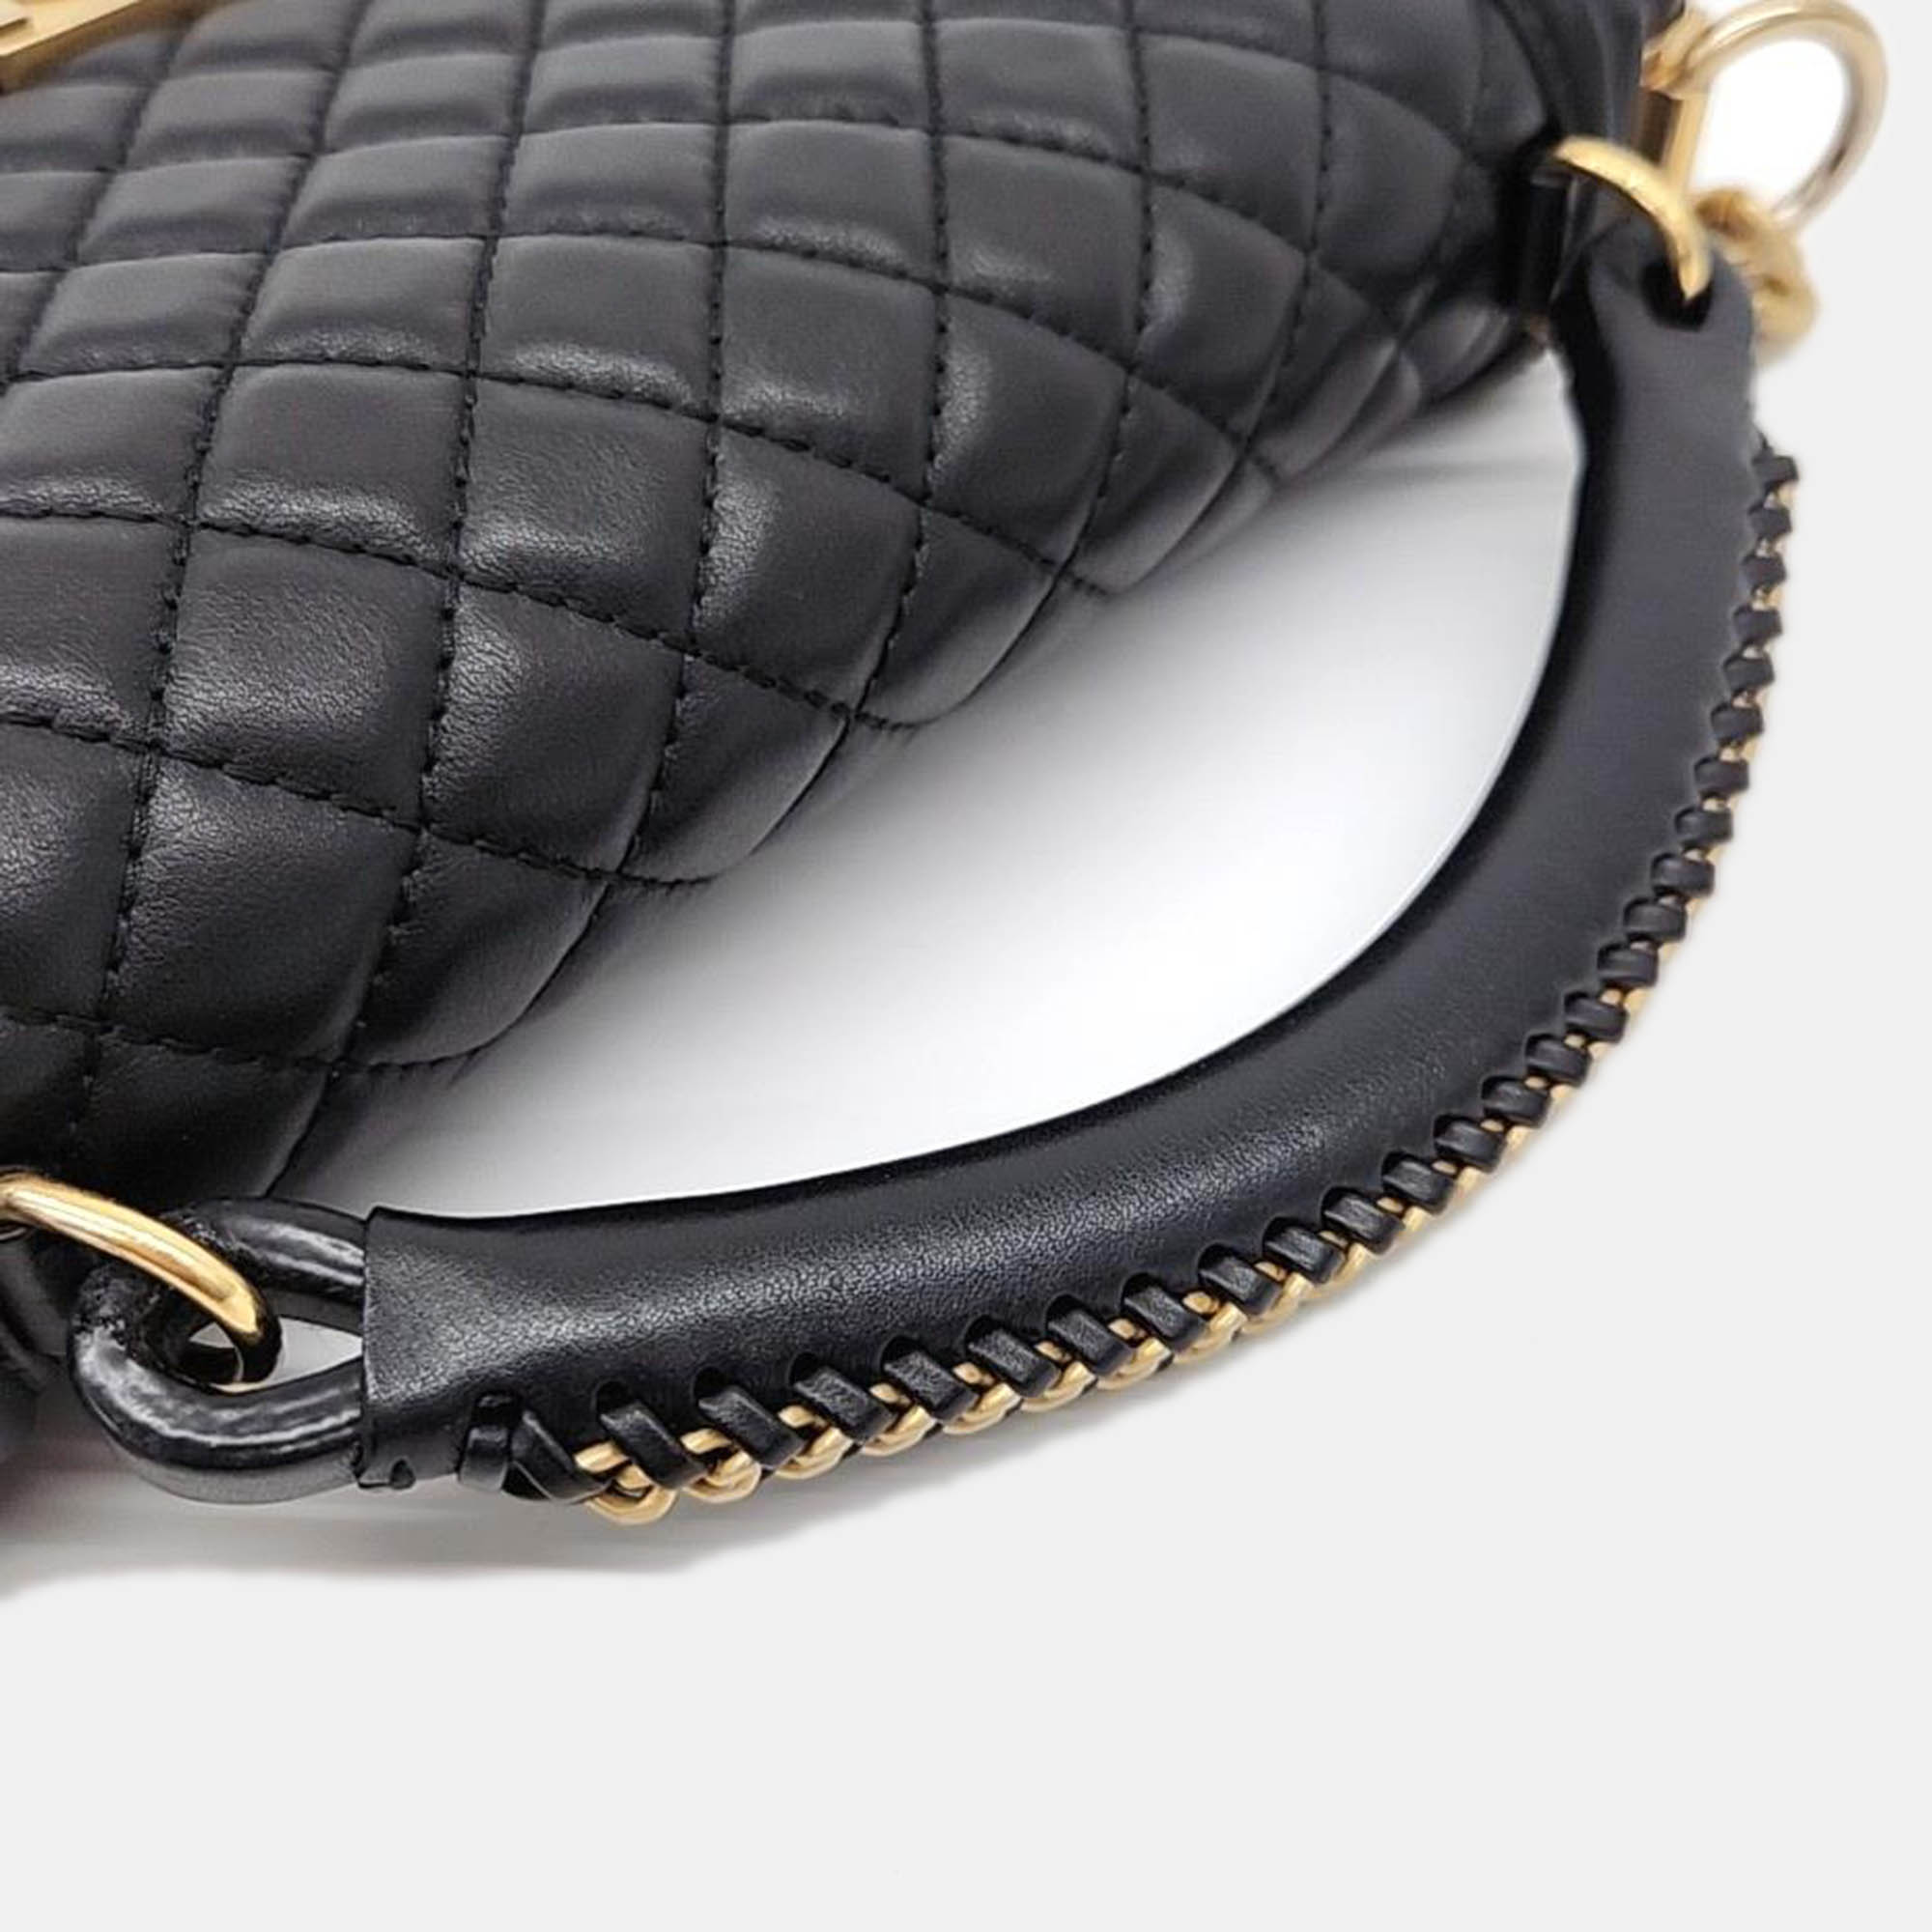 Chanel Black Leather Top Handle Boybag Medium Bag